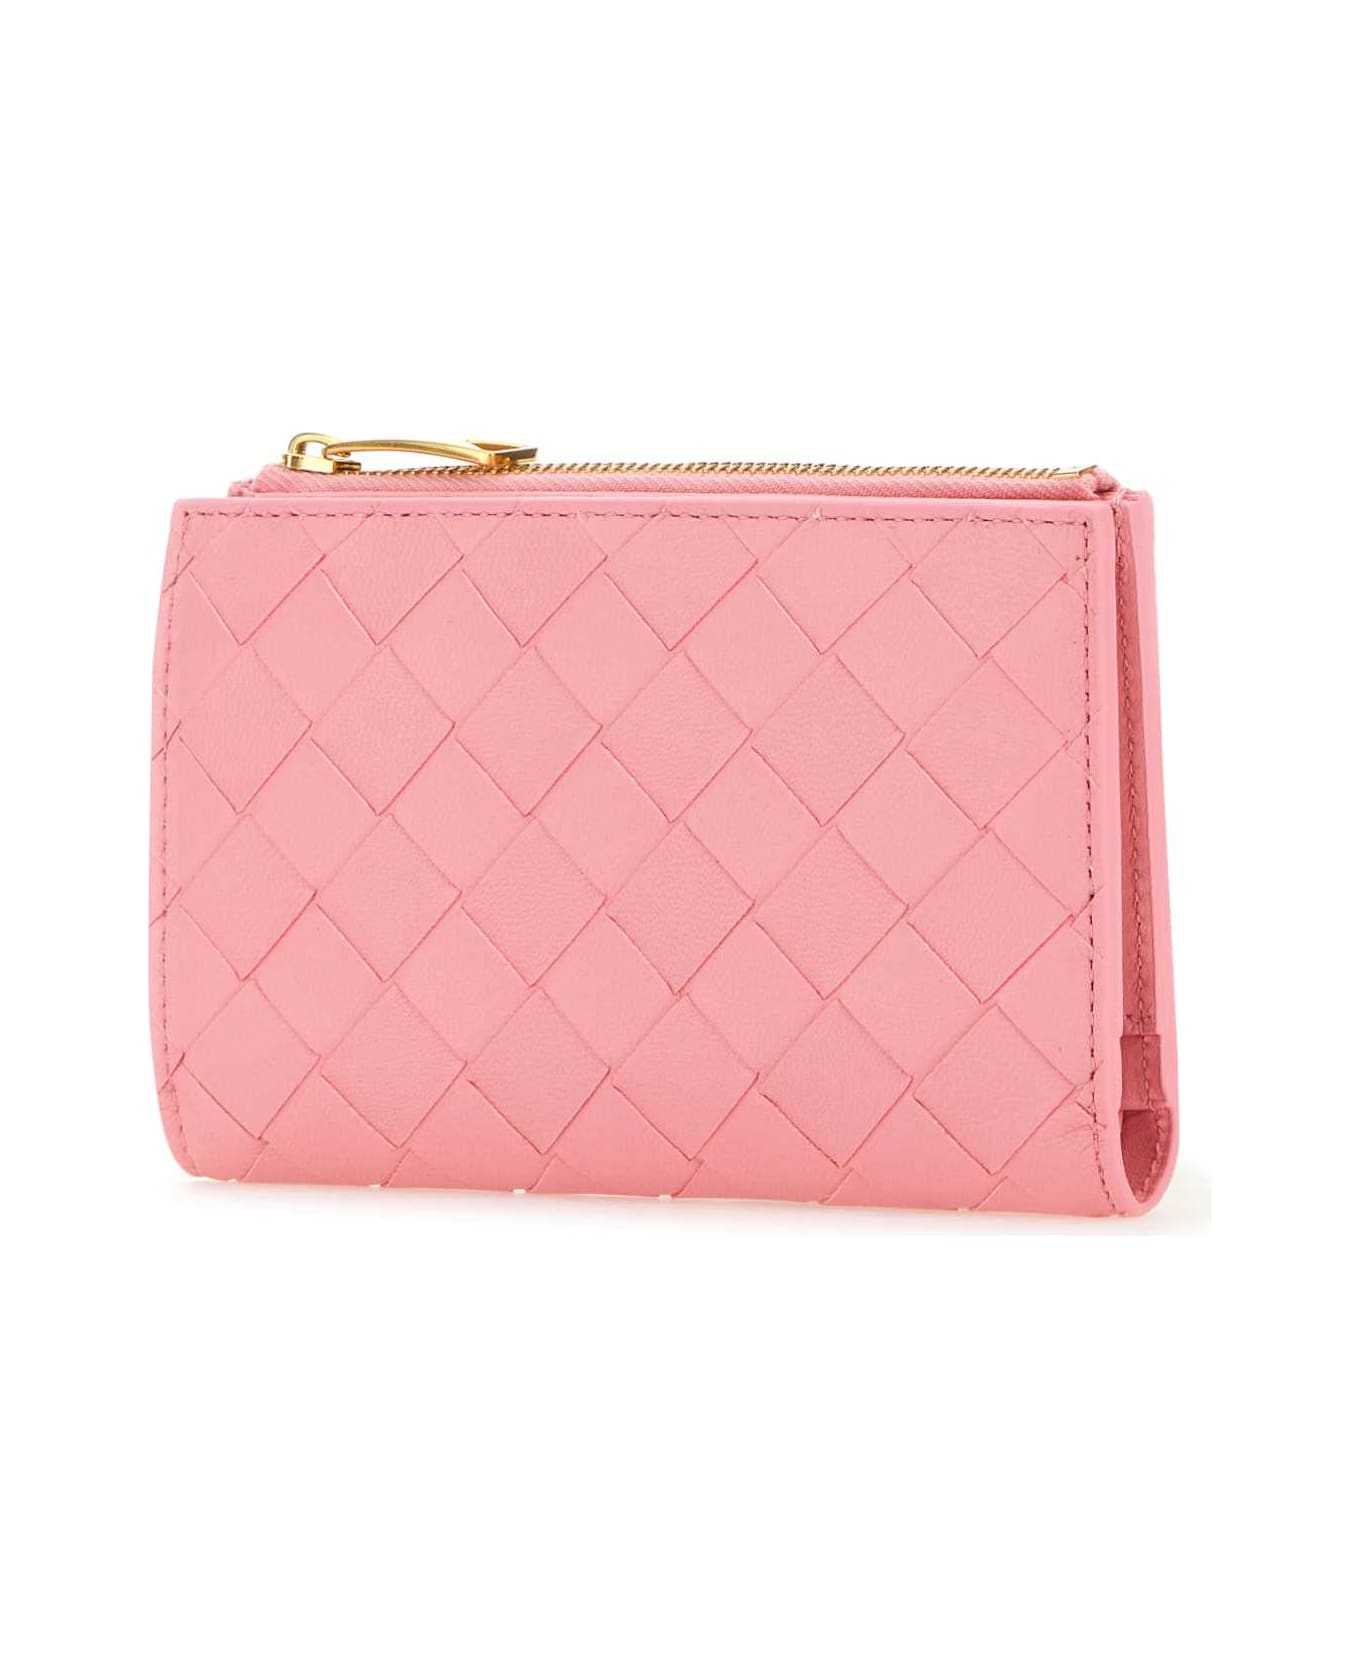 Bottega Veneta Pink Nappa Leather Medium Intrecciato Wallet - PINK